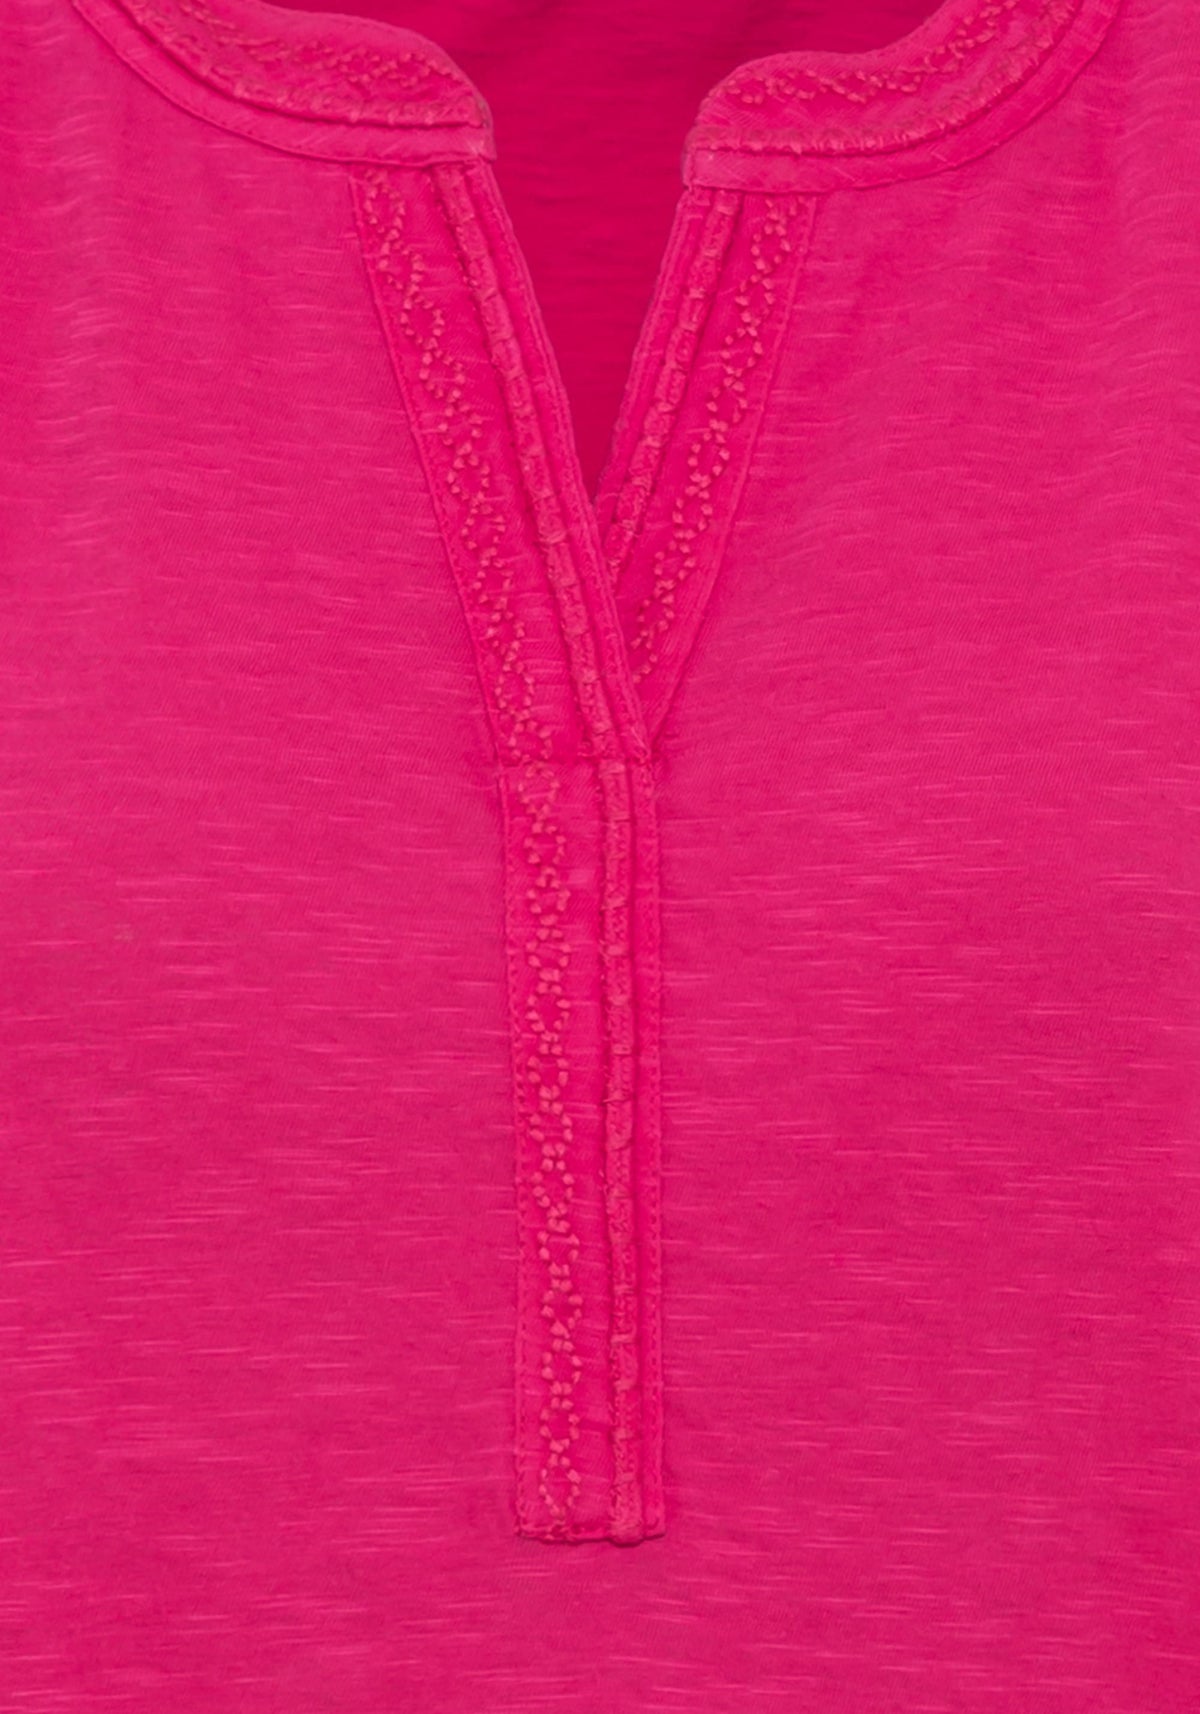 100% Cotton Sleeveless Embroidered Tunic Shell T-Shirt